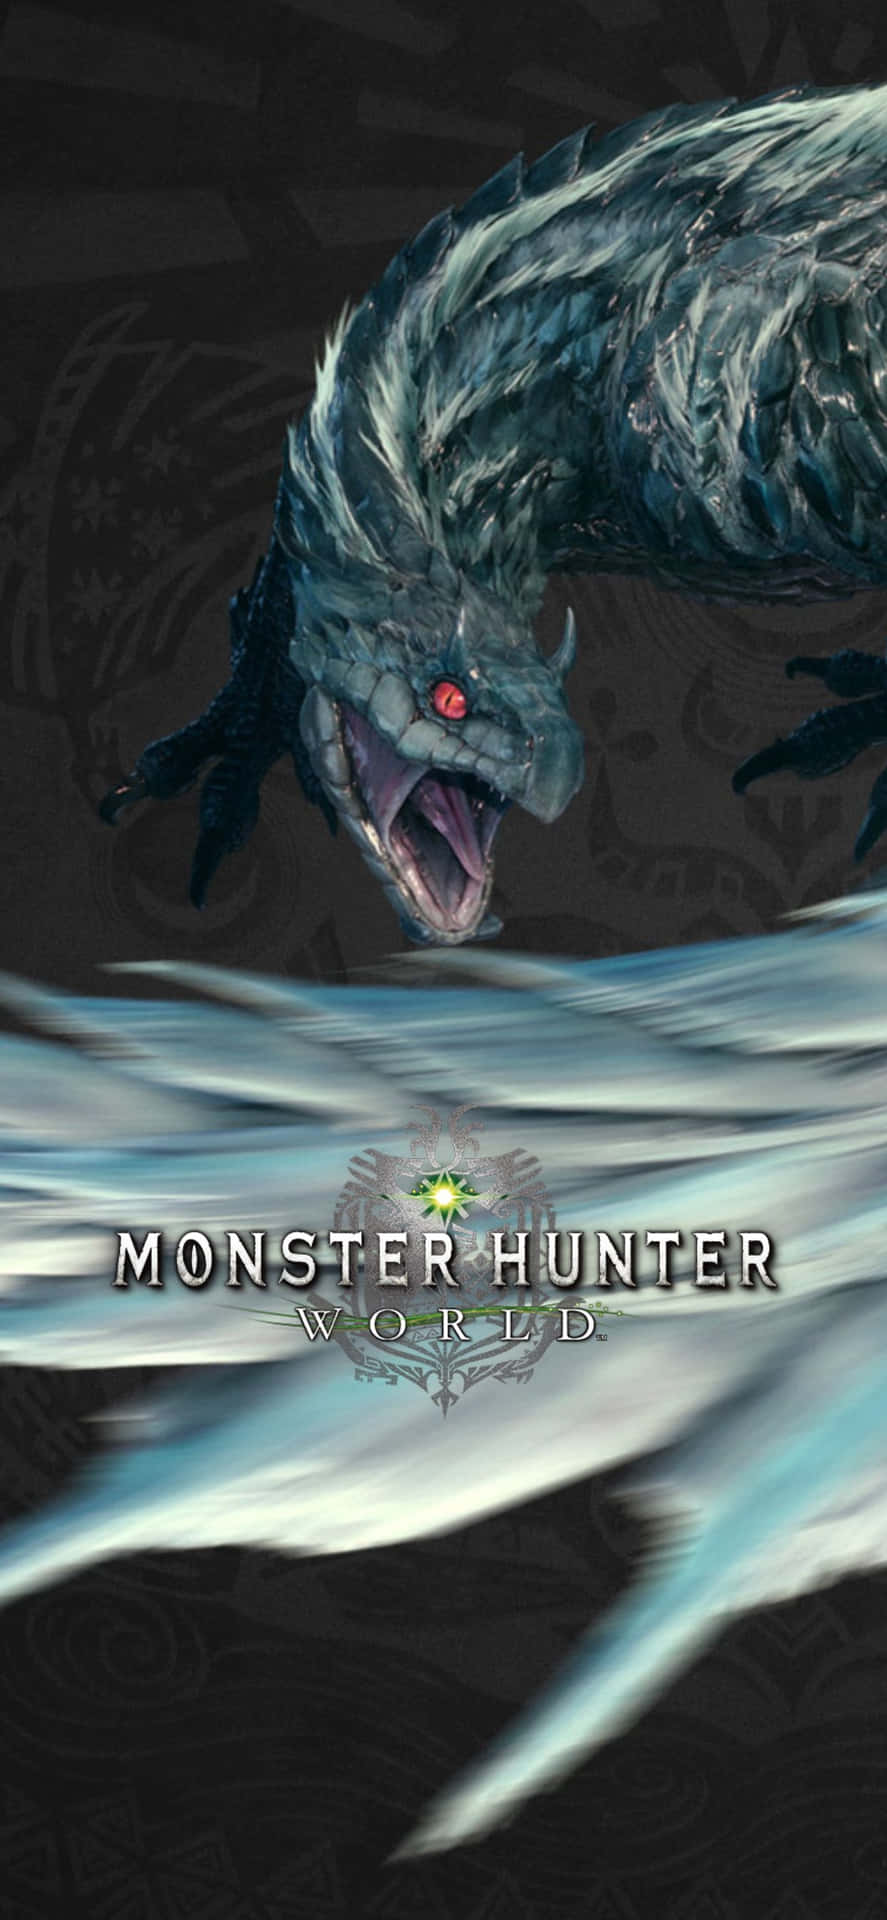 Iphonexs Max Tobi-kadachi Monster Hunter World Bakgrund.